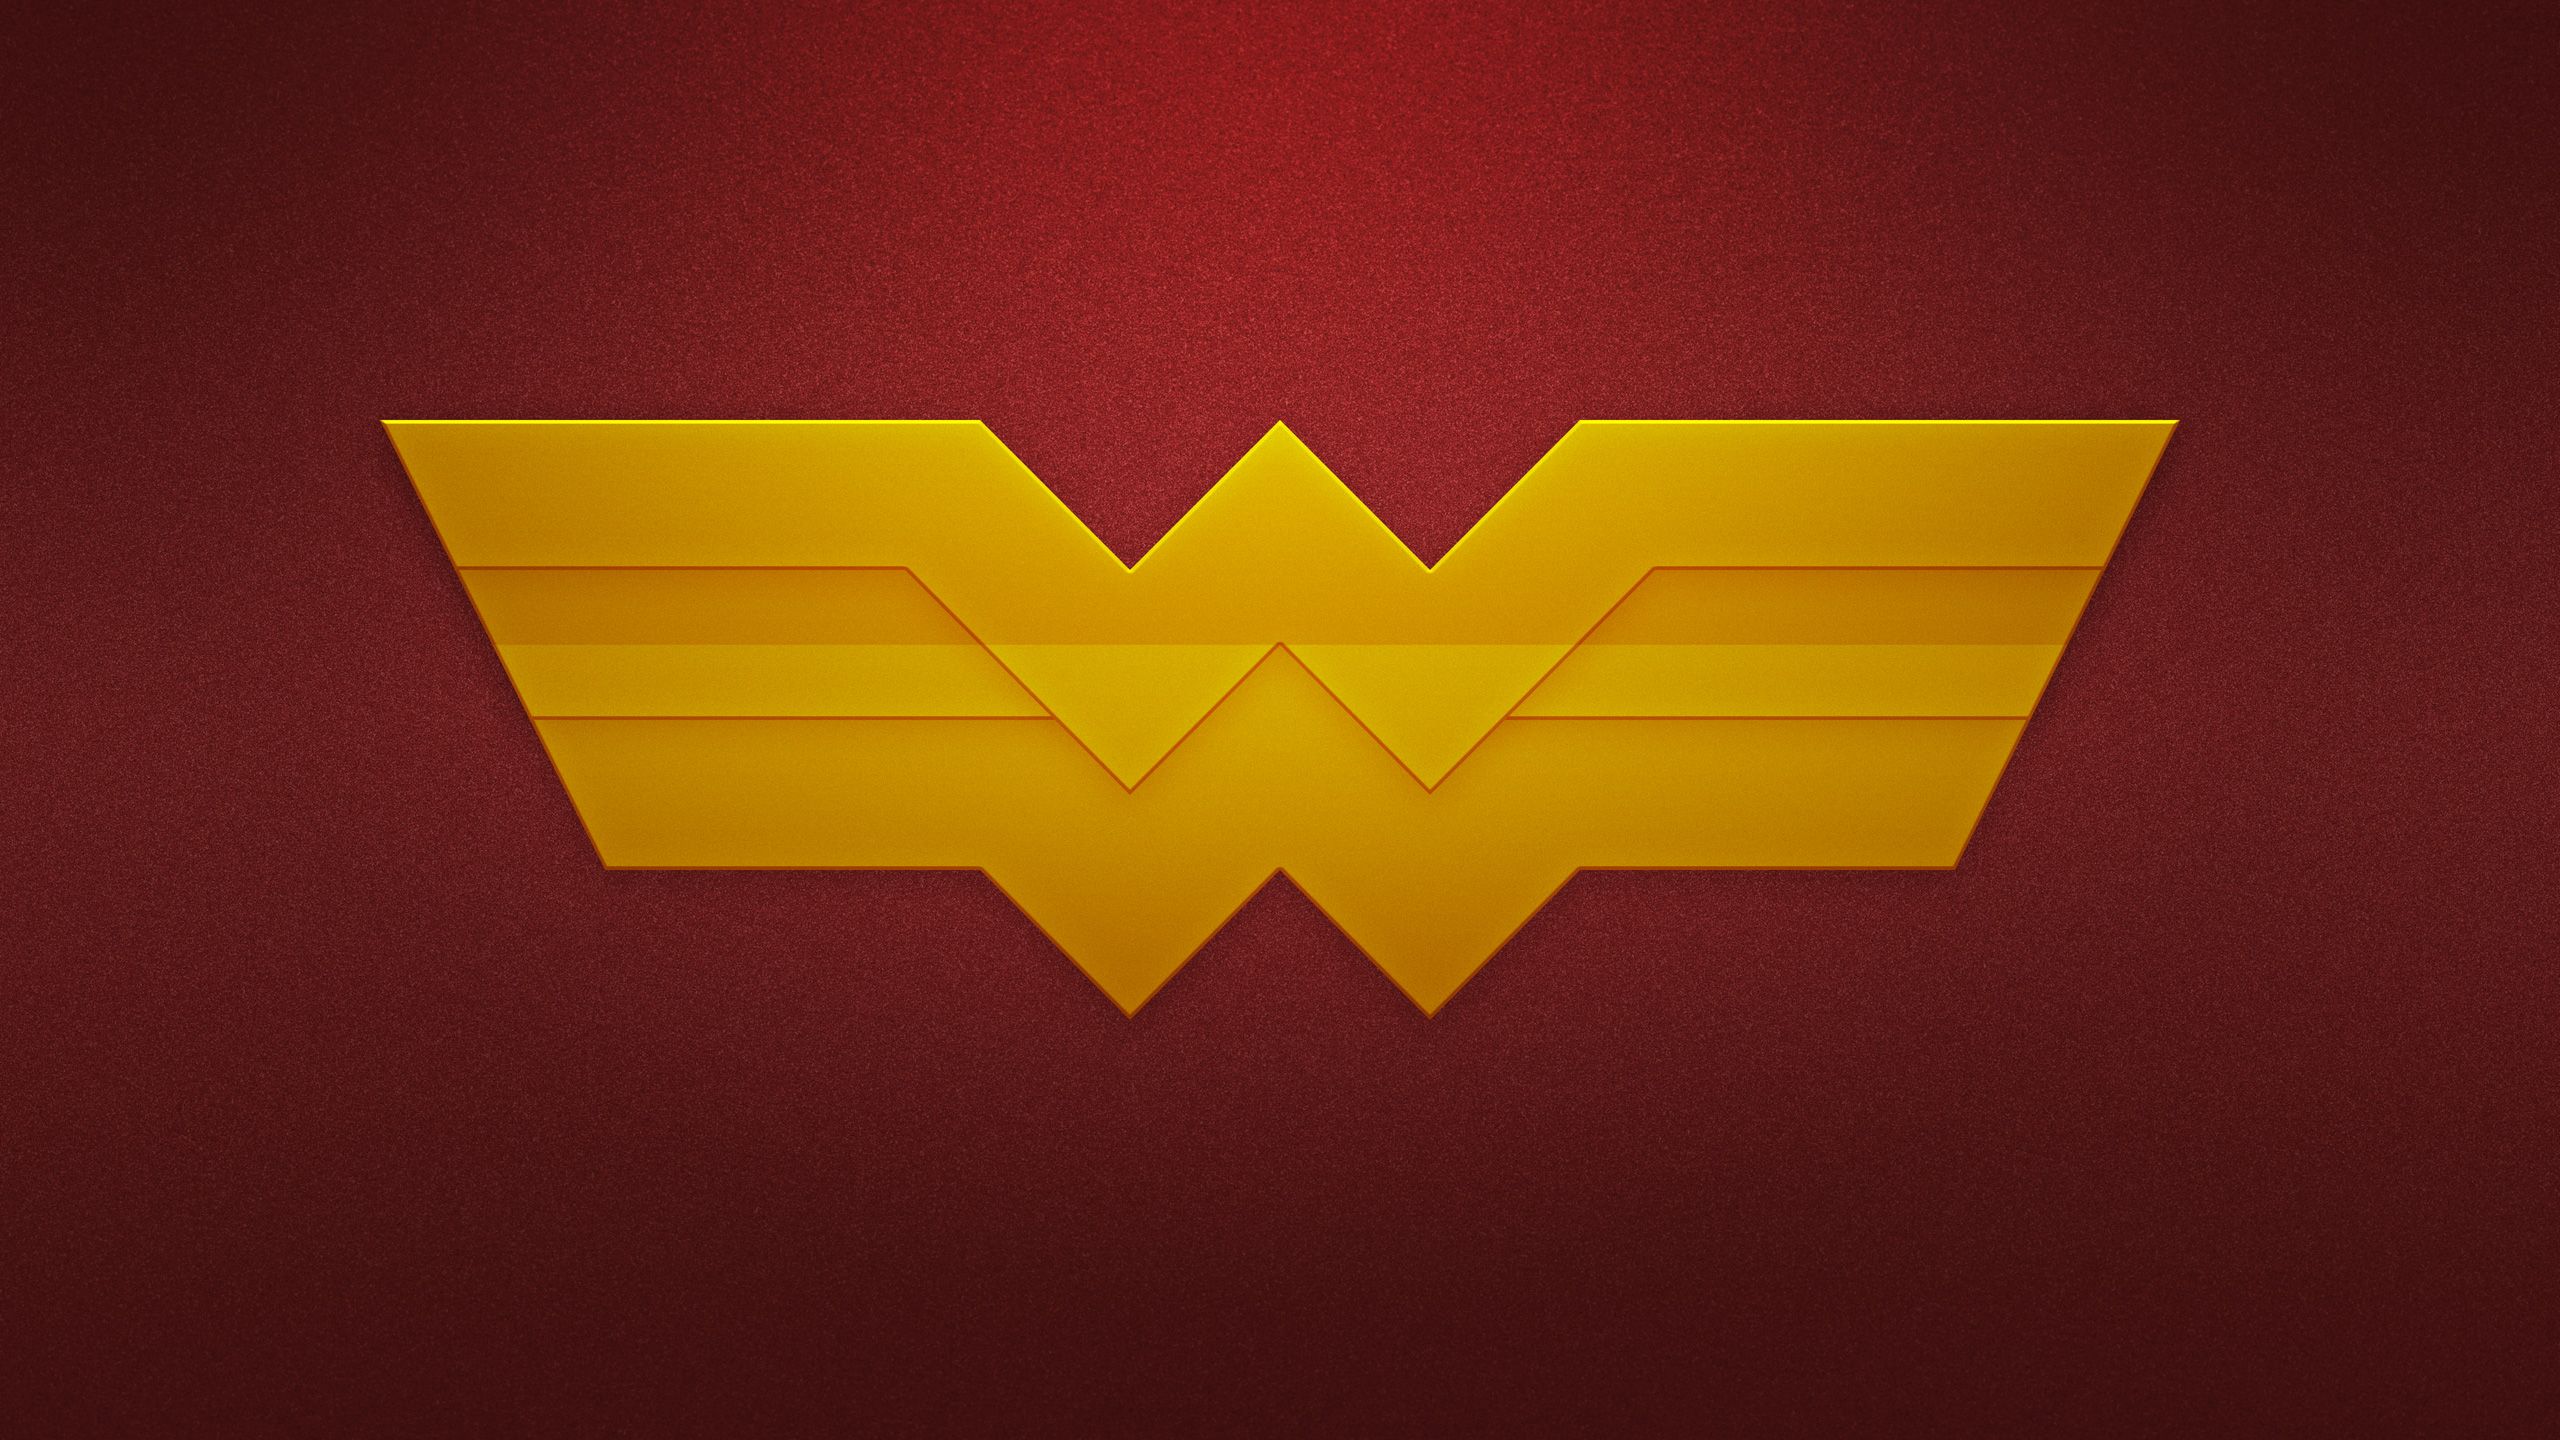 Wonder Woman Logo Art, HD Logo, 4k Wallpaper, Image, Background, Photo and Picture